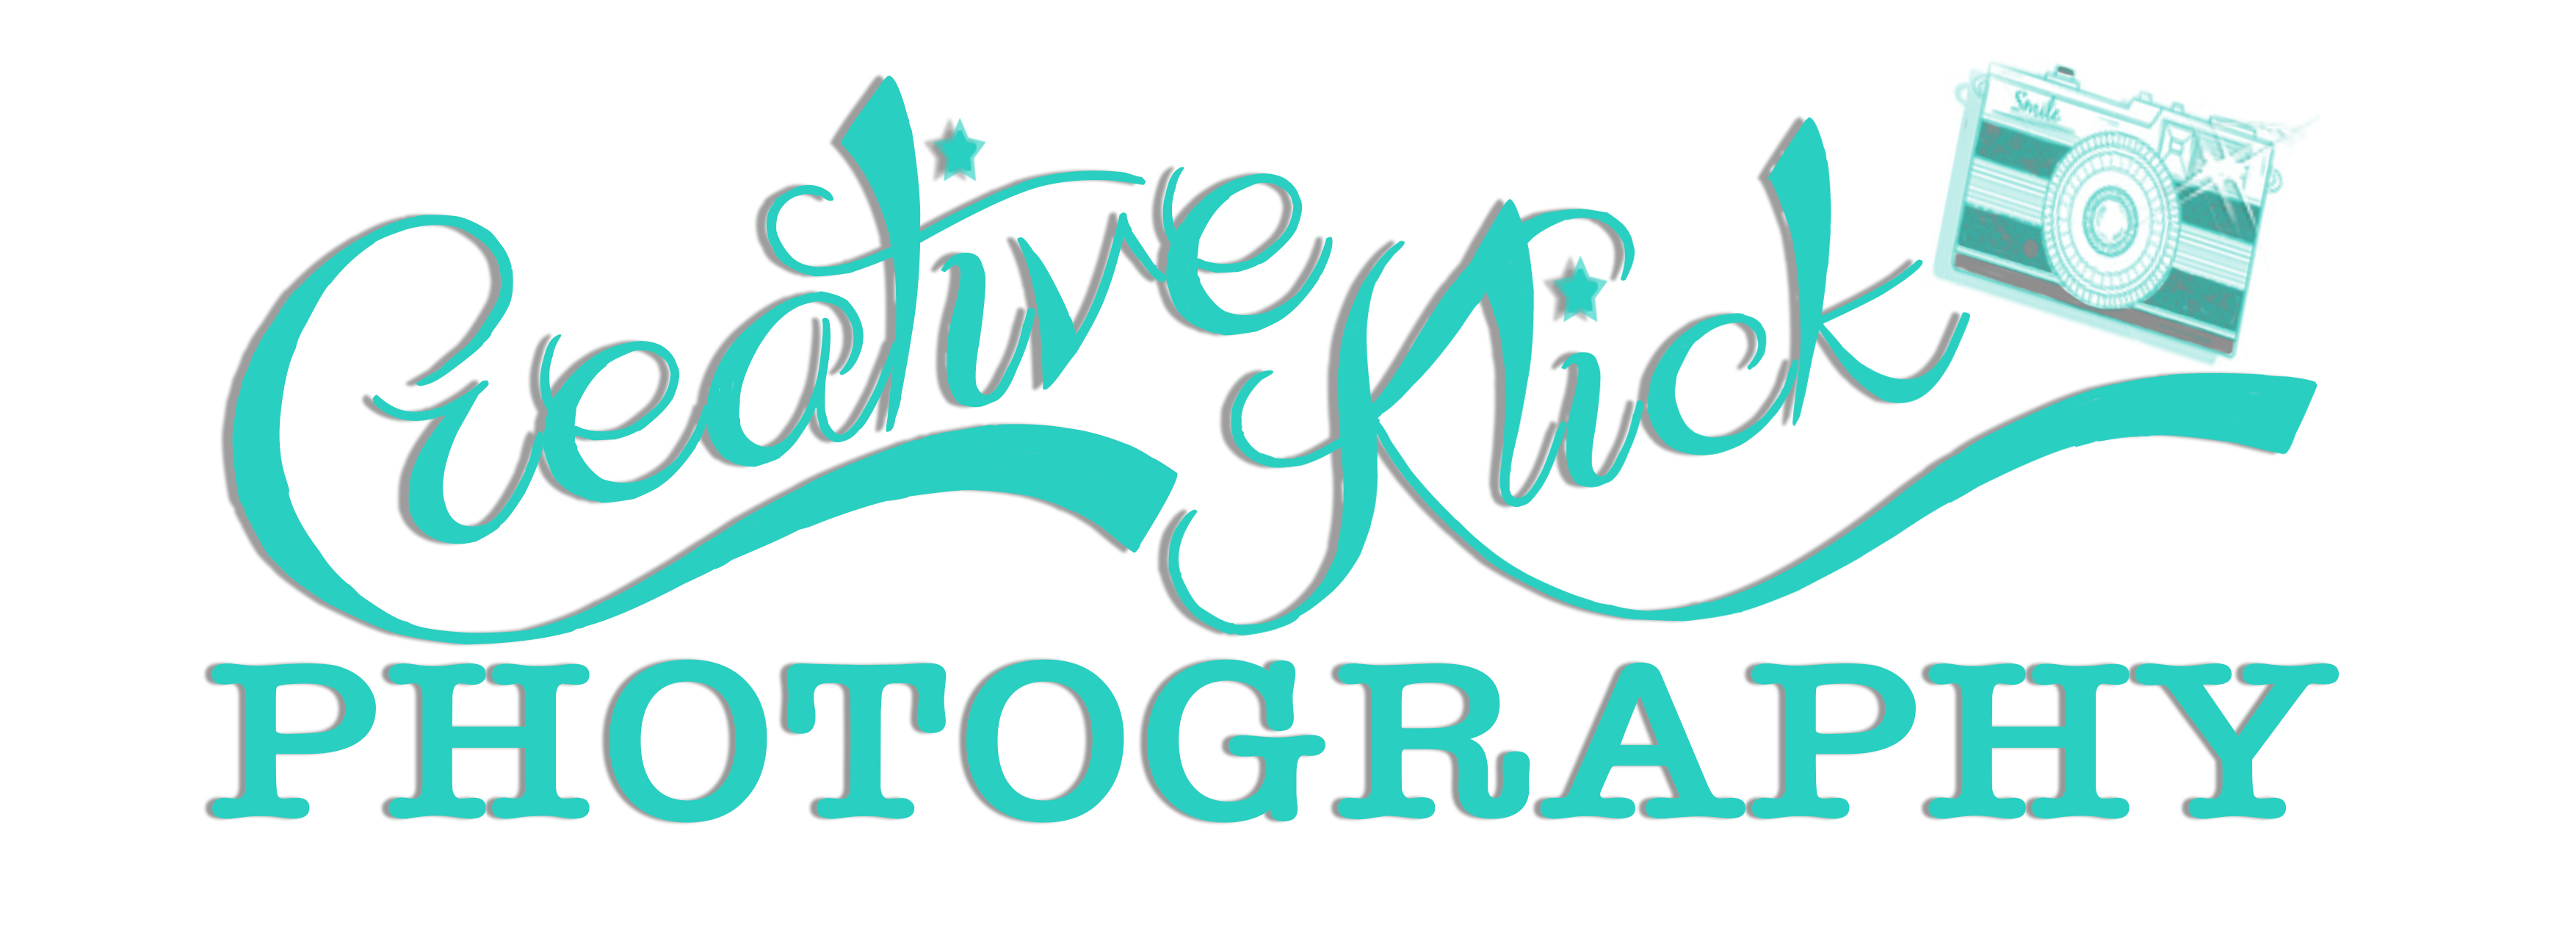 Creative Klick Photography